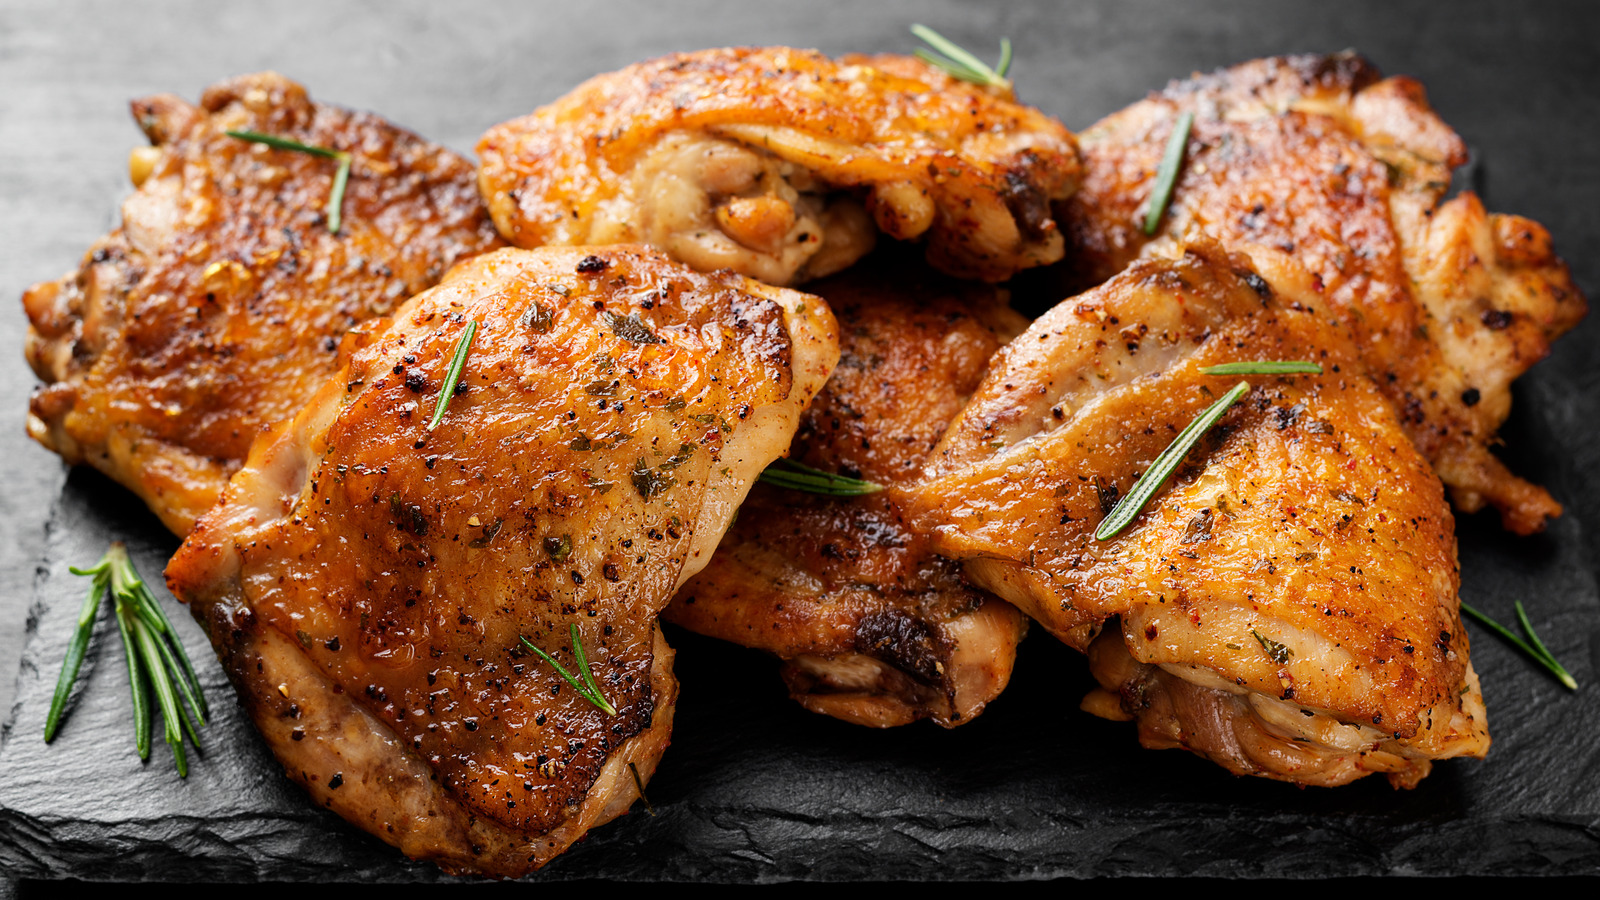 How Unhealthy Is Chicken Skin? - Health Digest